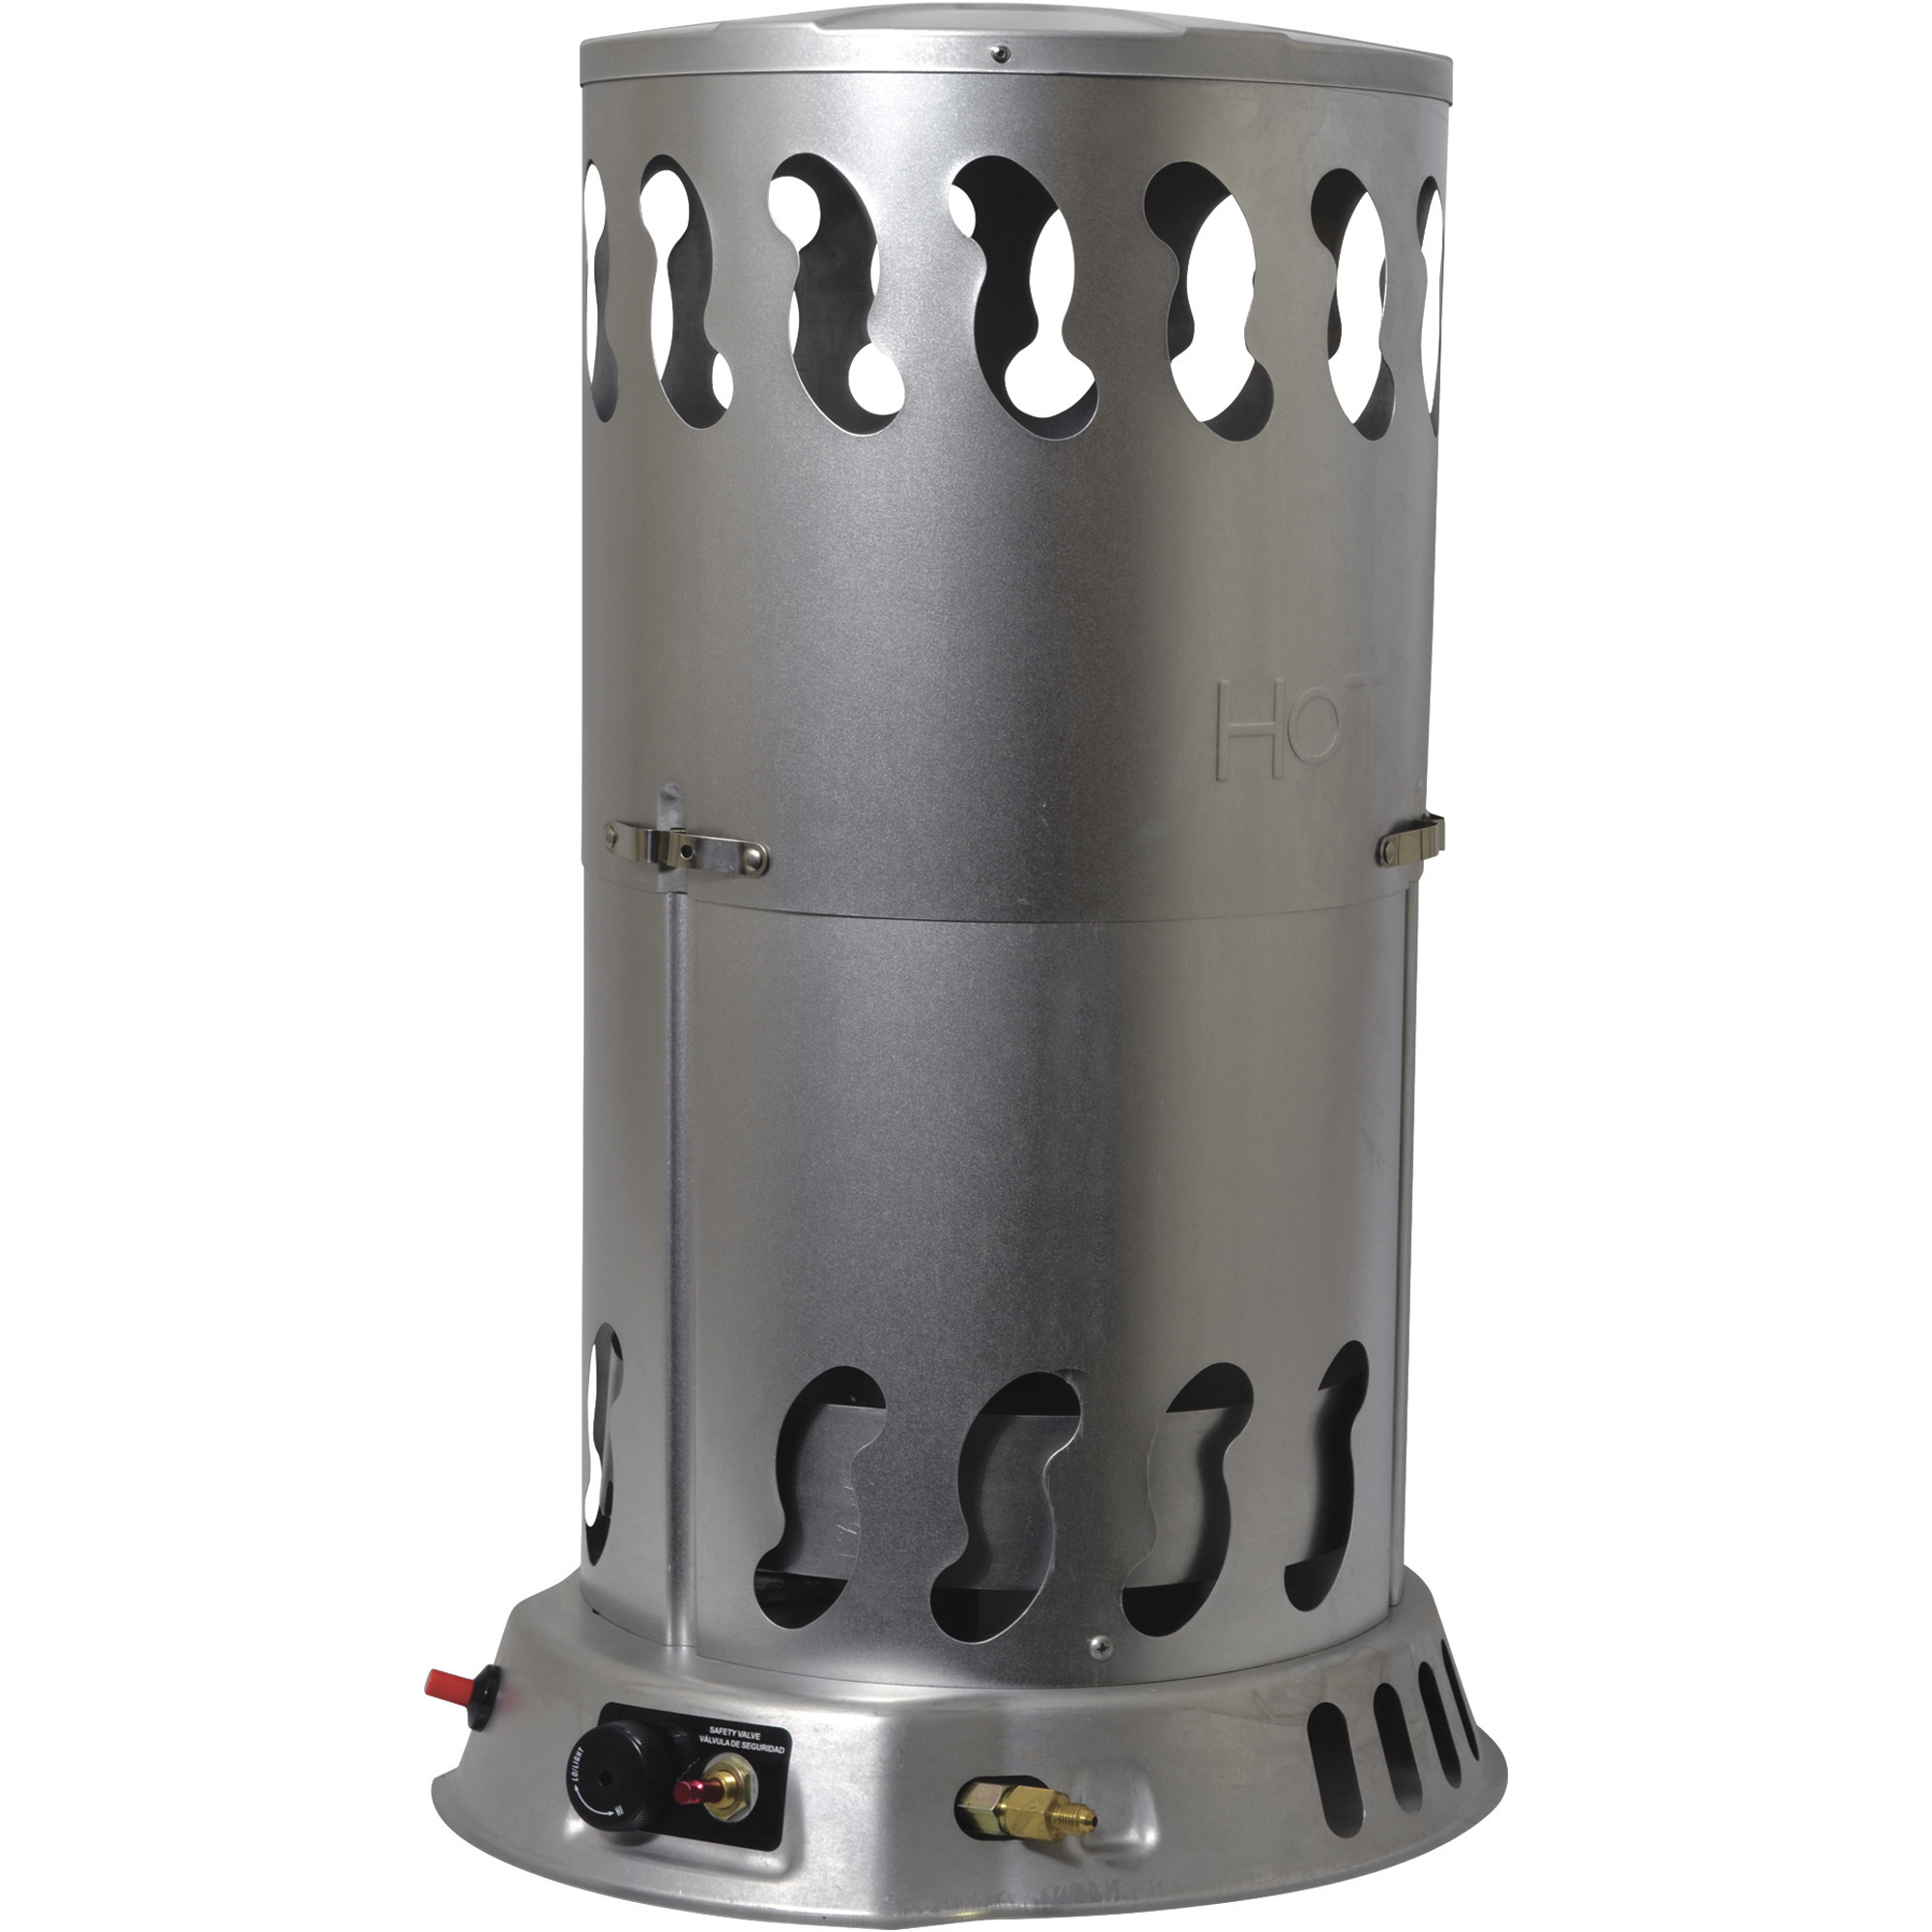 Mr. Heater Propane Convection Heater, 200,000 BTU, Model F270500